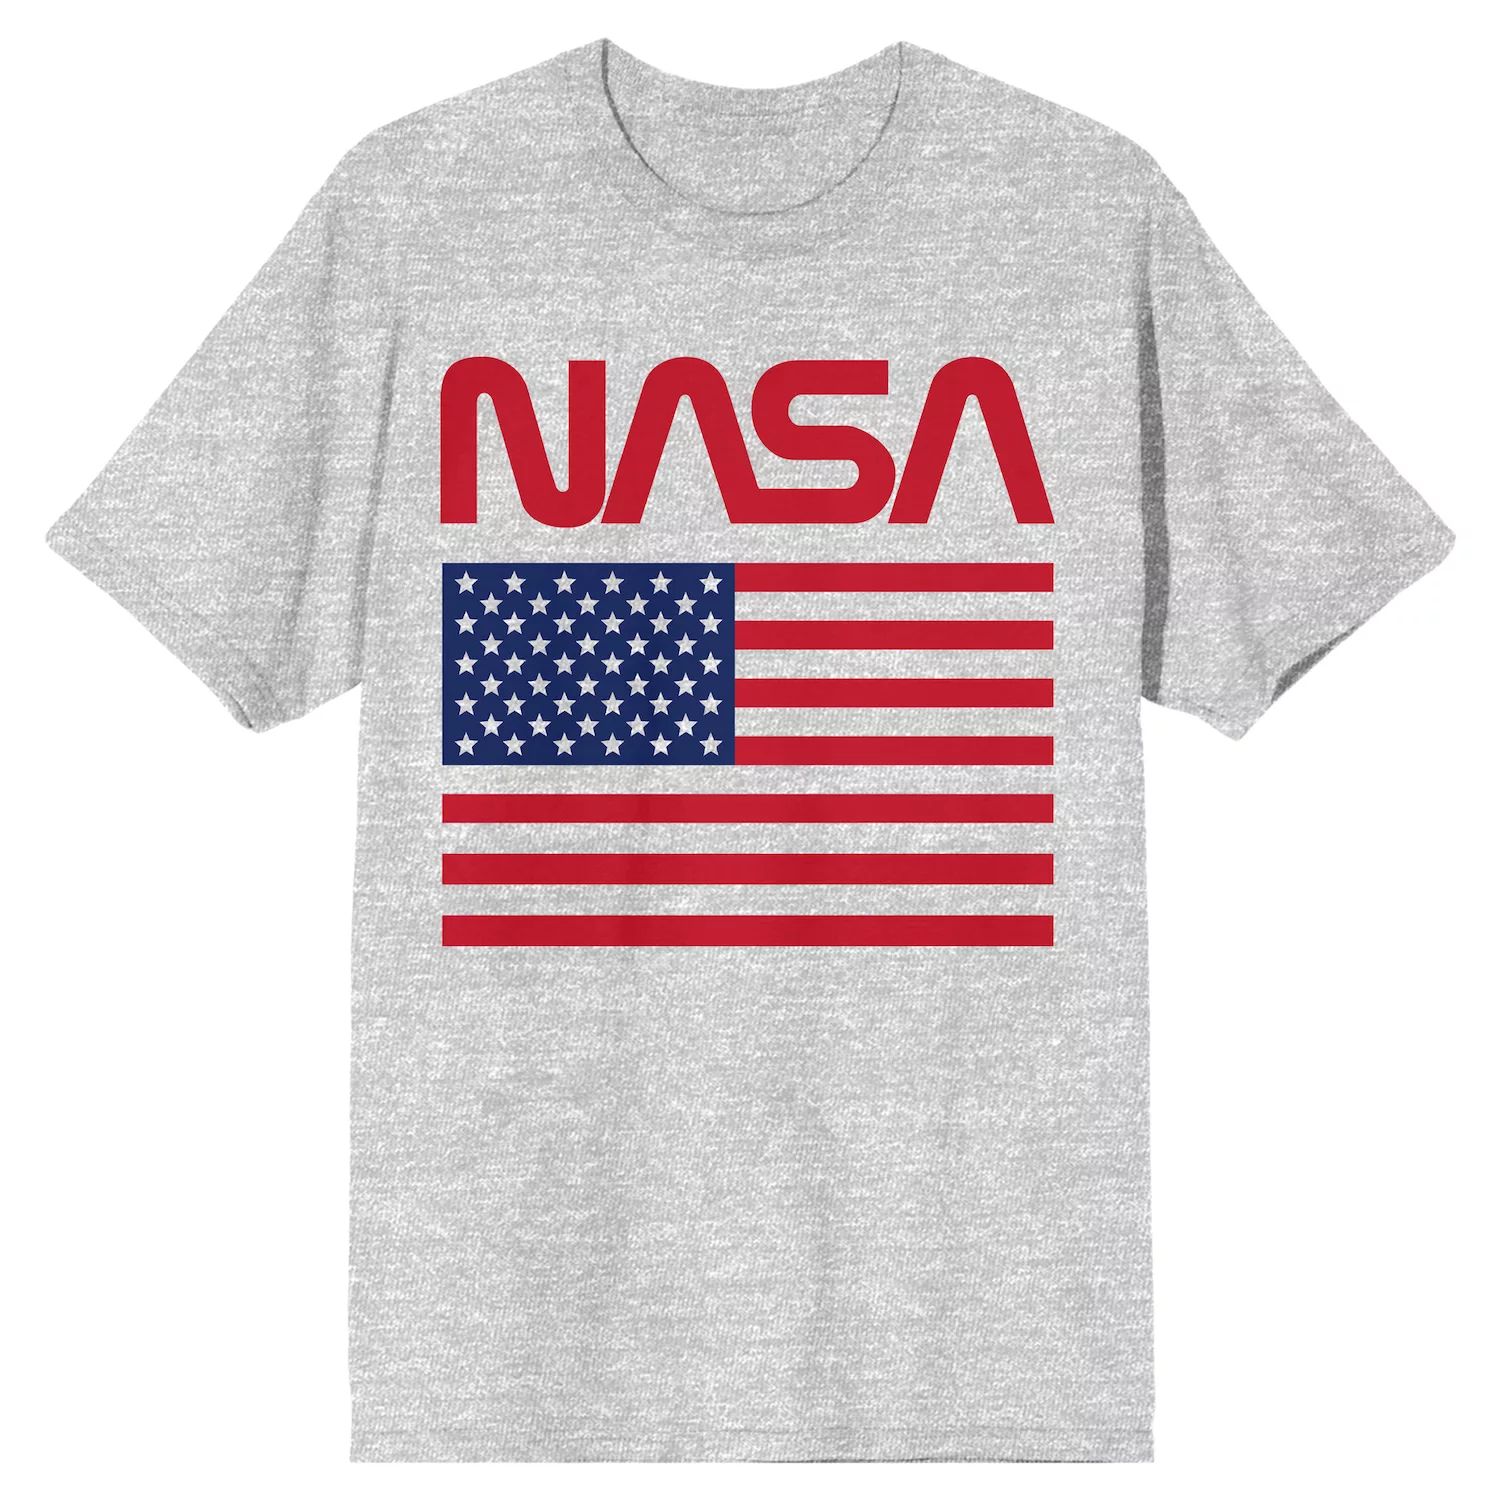 Мужская футболка NASA с американским флагом Licensed Character